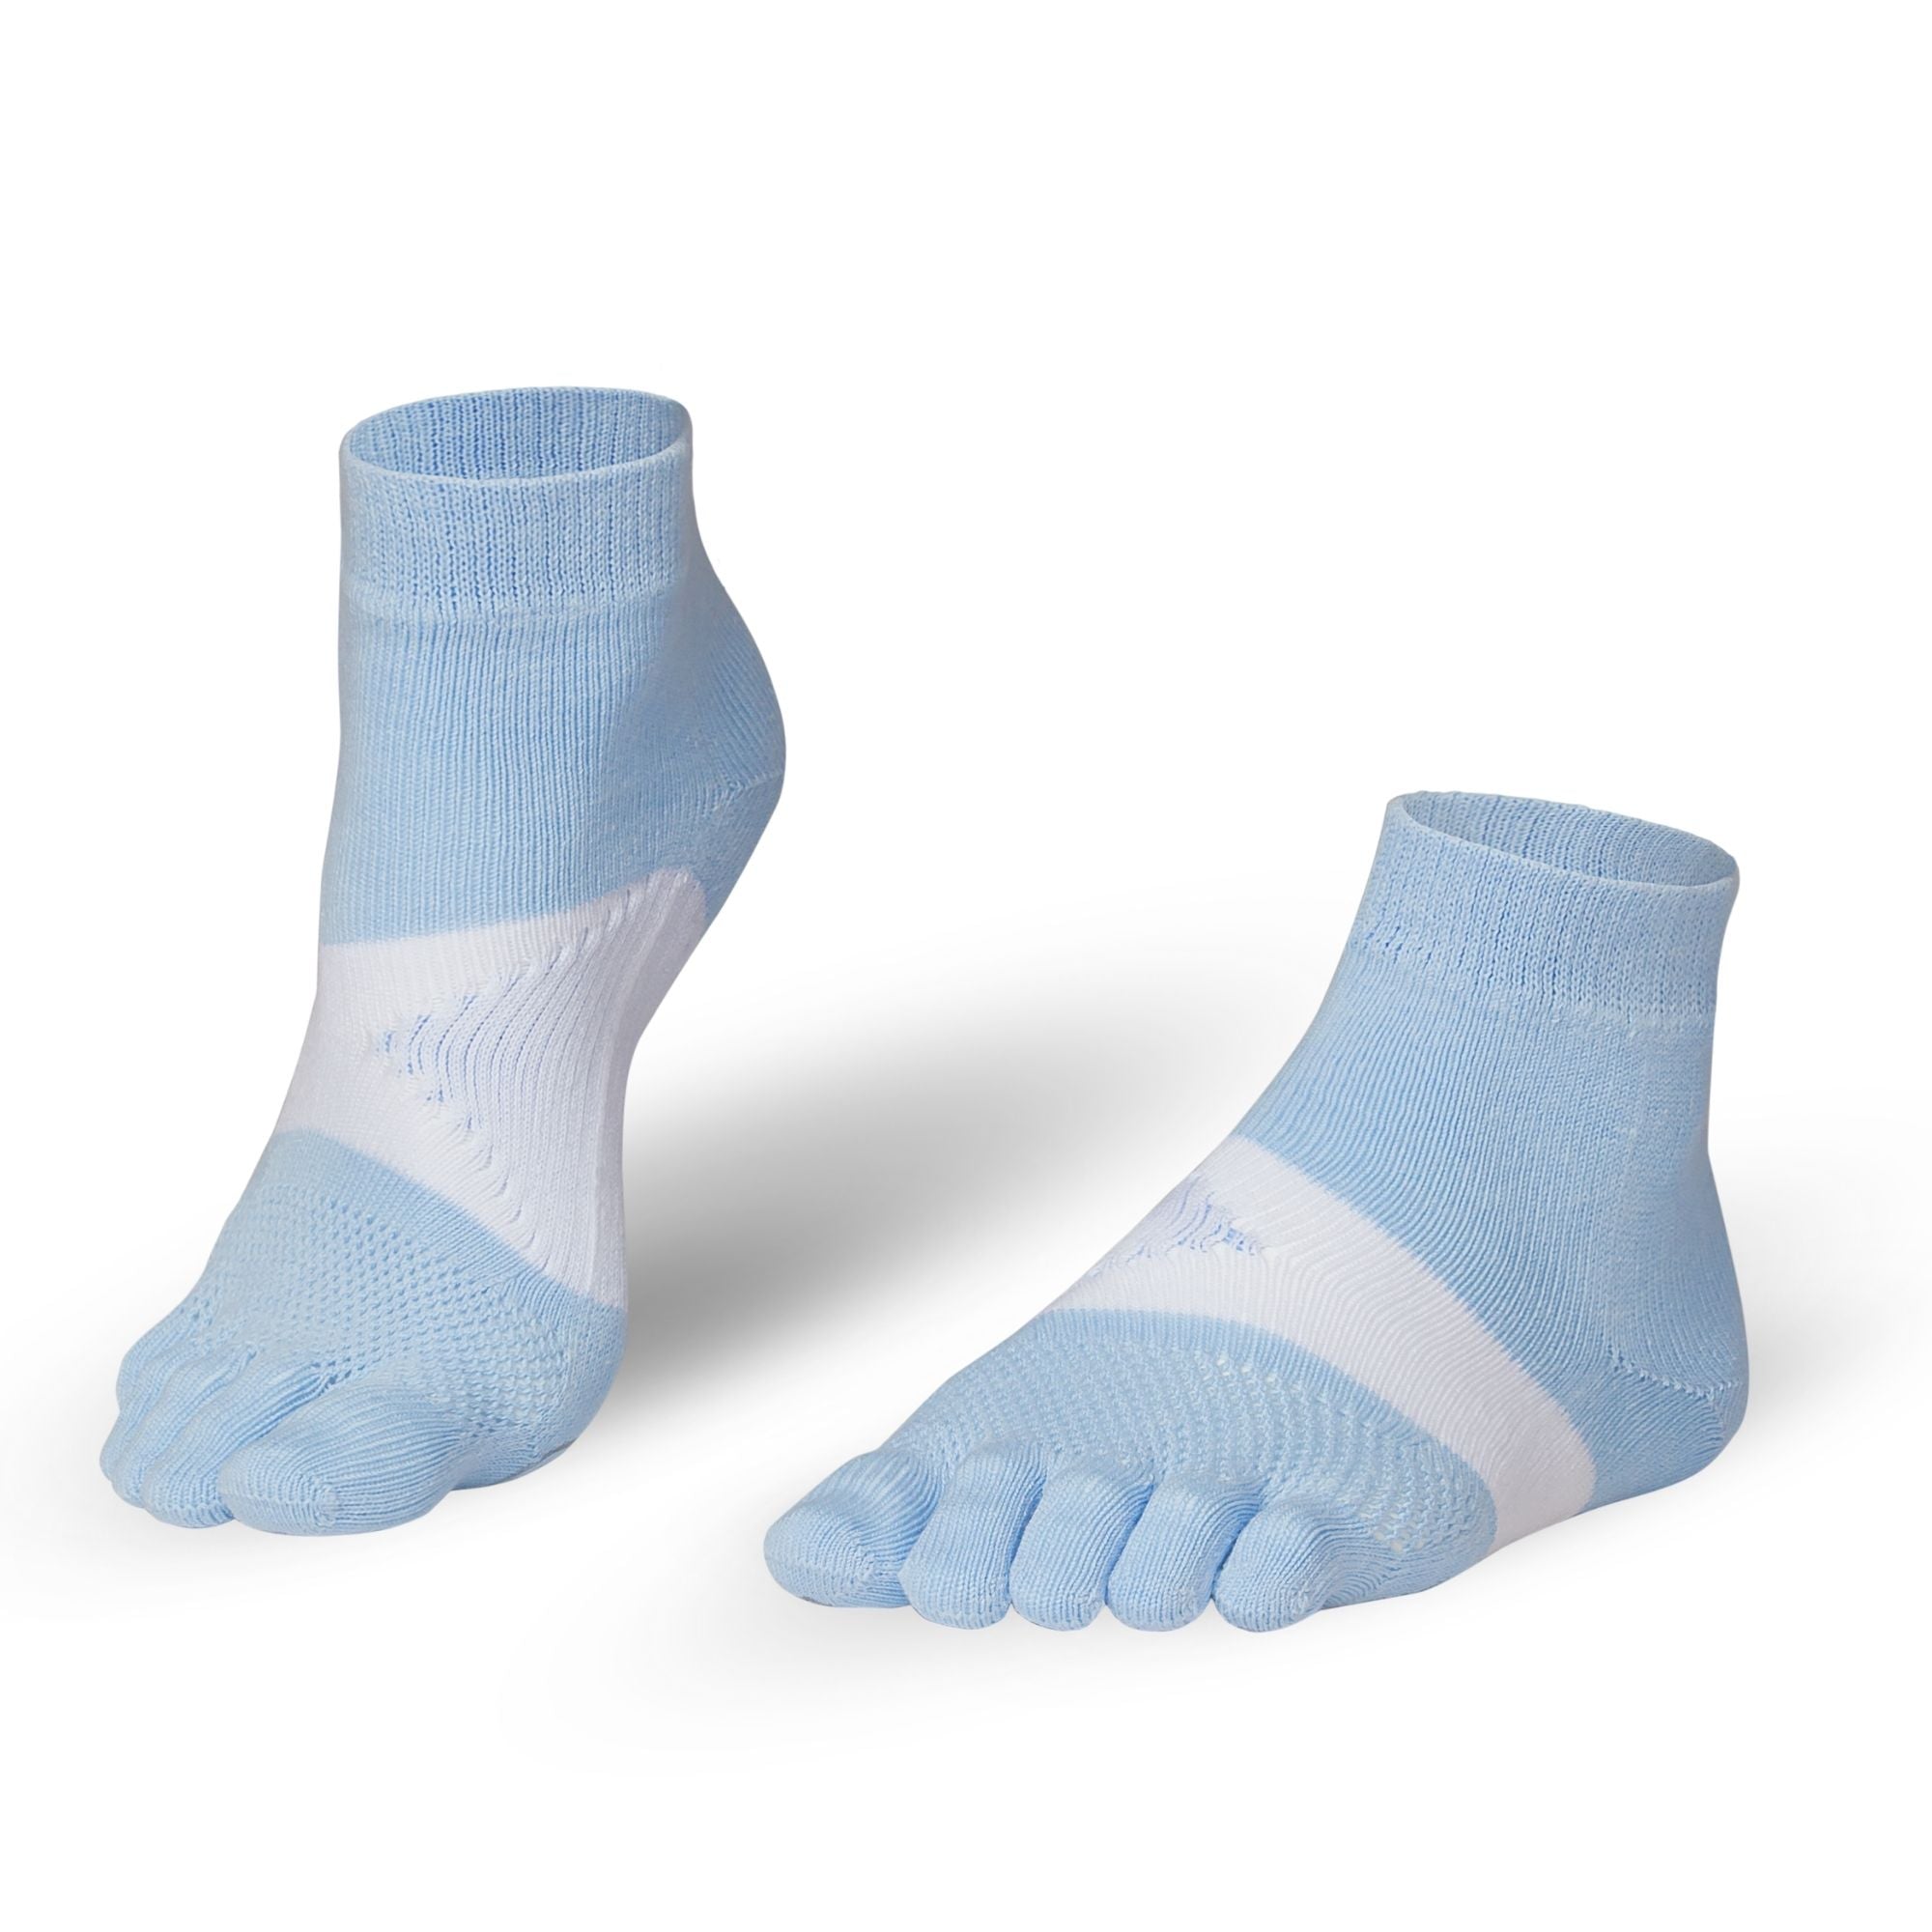 Knitido Marathon TS Running Toe Socks with In-Shoe Non-Slip Coating :  : Fashion